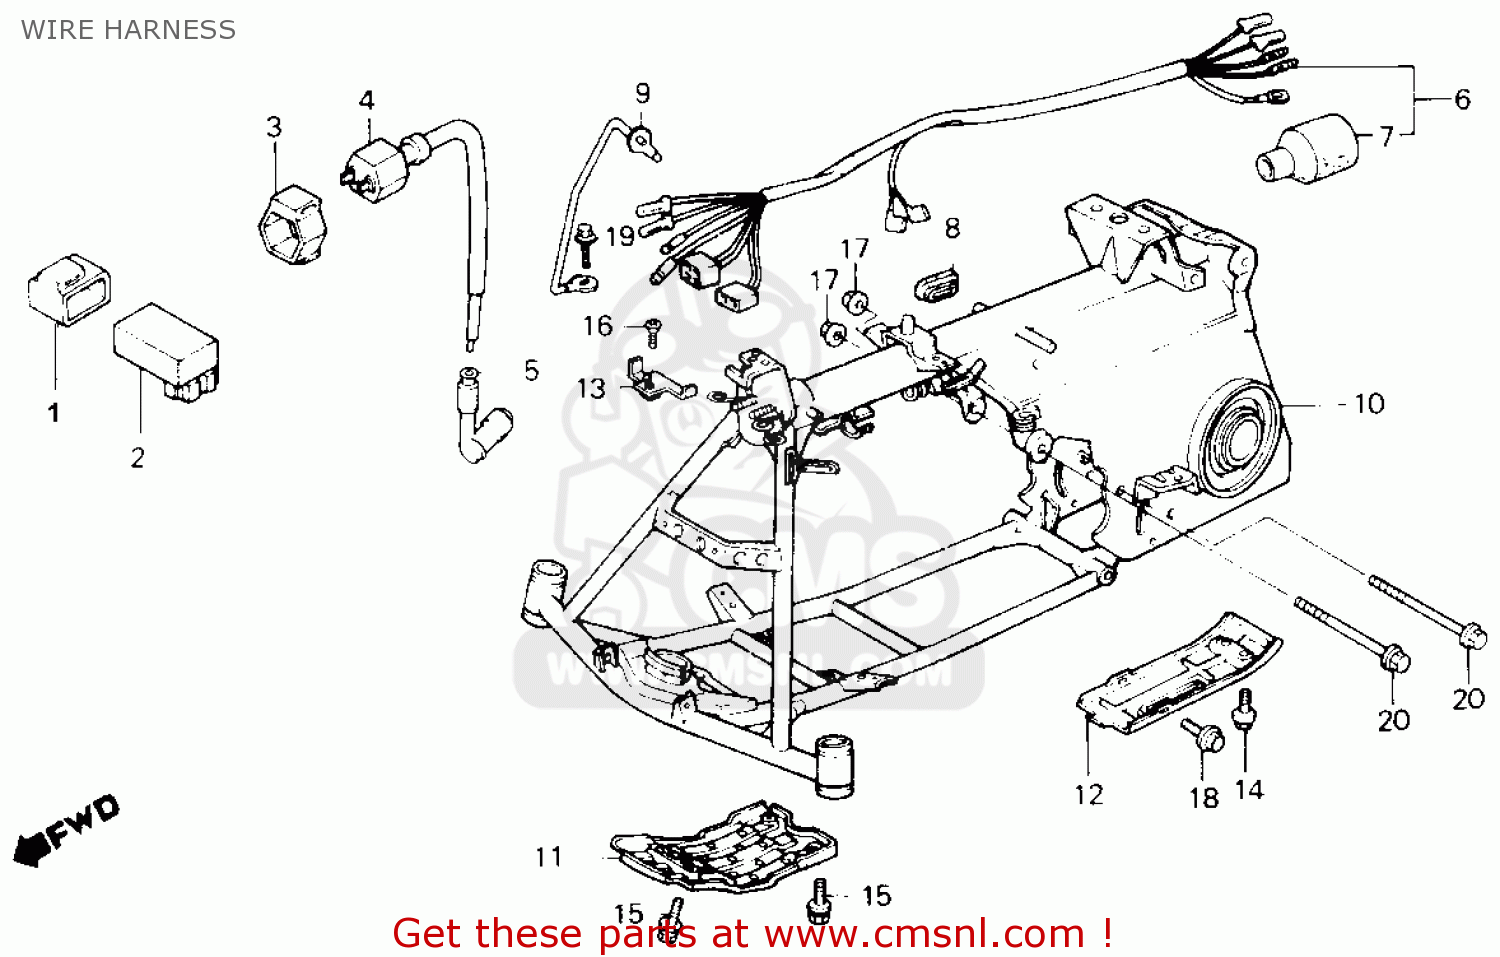 1986 Honda trx wiring diagrams #7